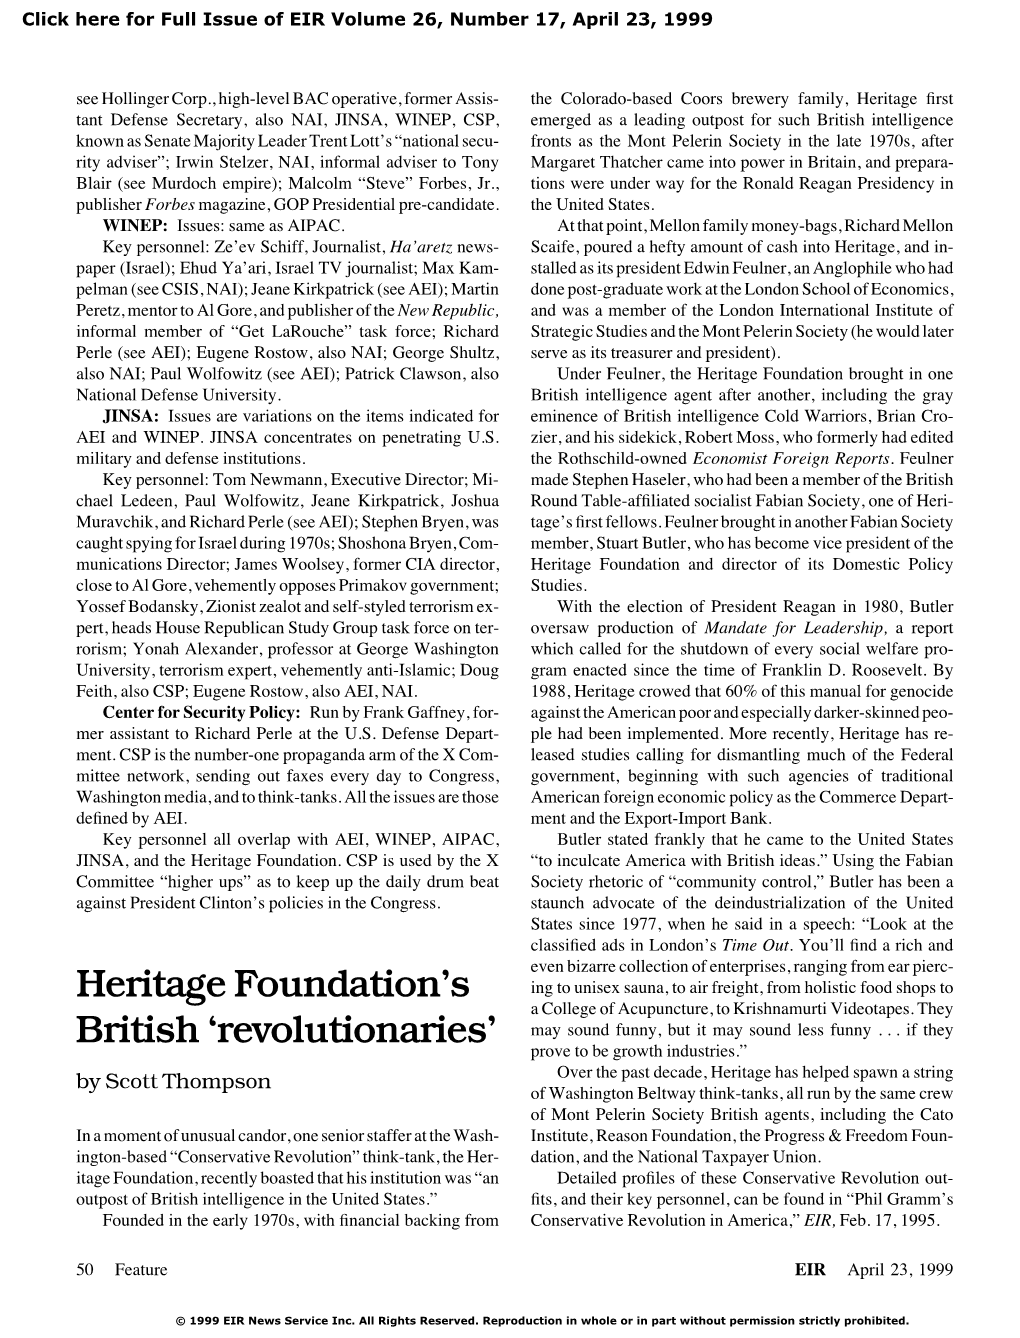 Heritage Foundation's British 'Revolutionaries'